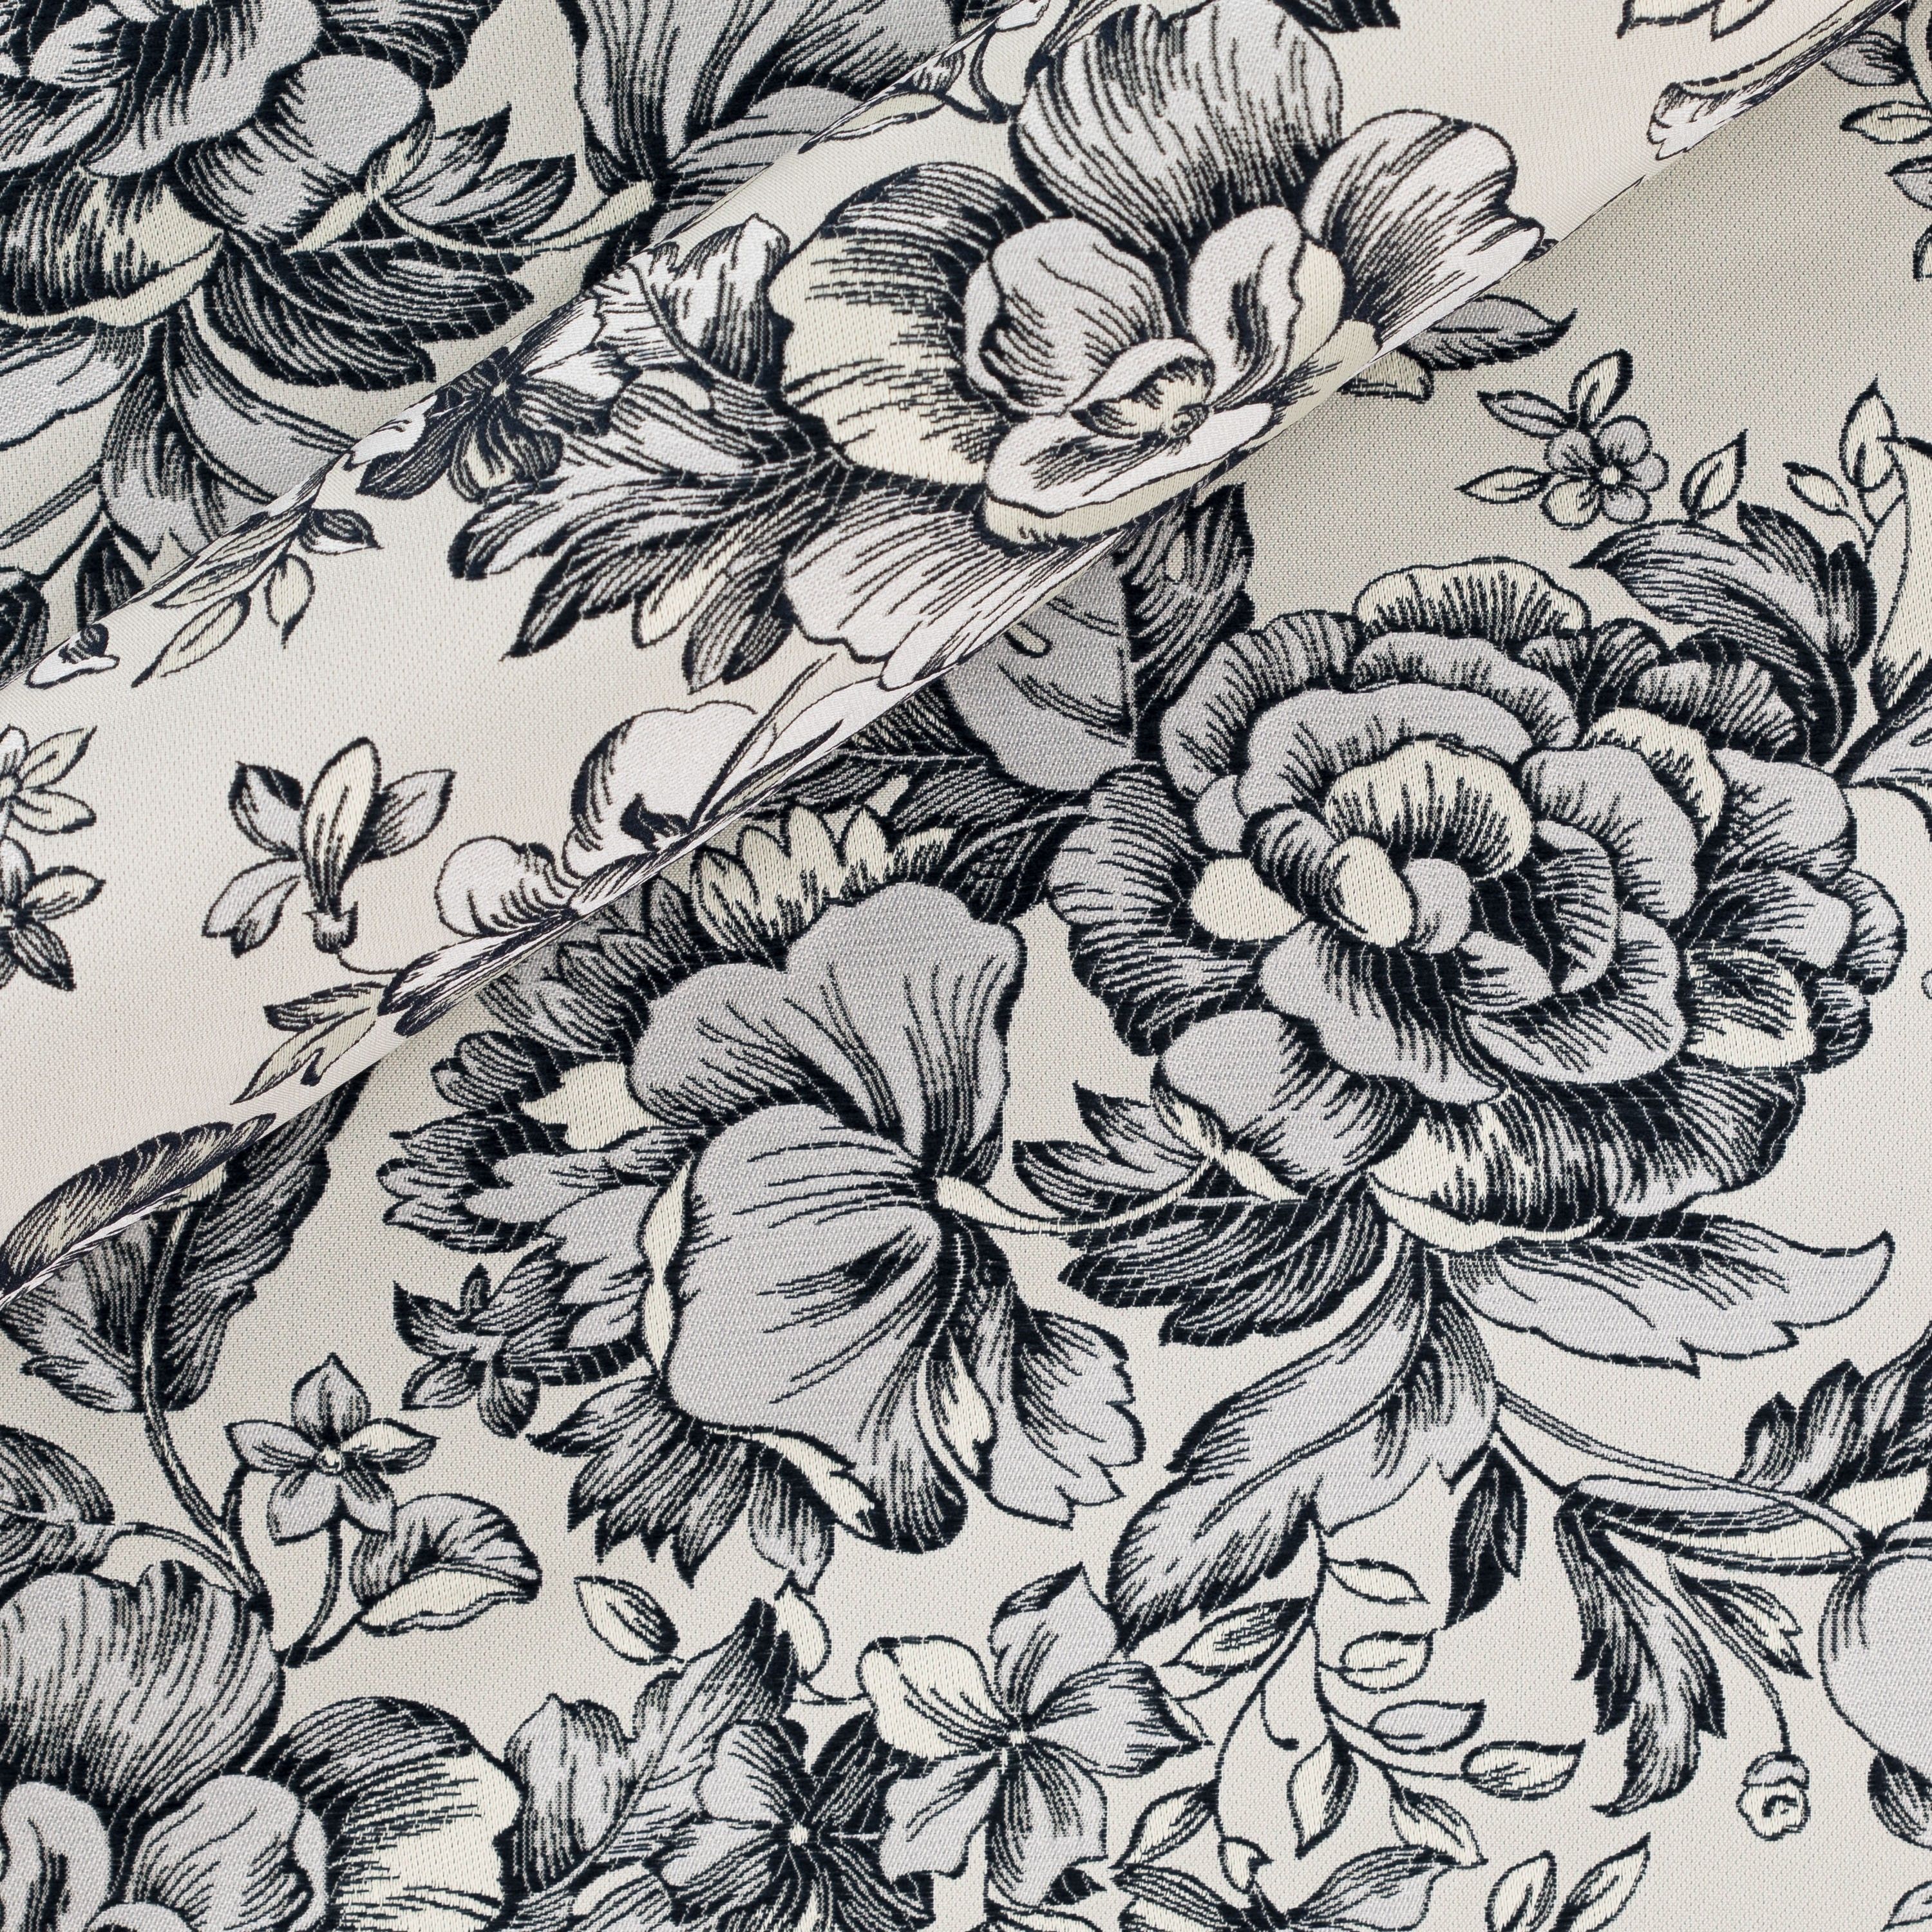 https://www.carnet.it/28839/jacquard-with-floral-pattern.jpg